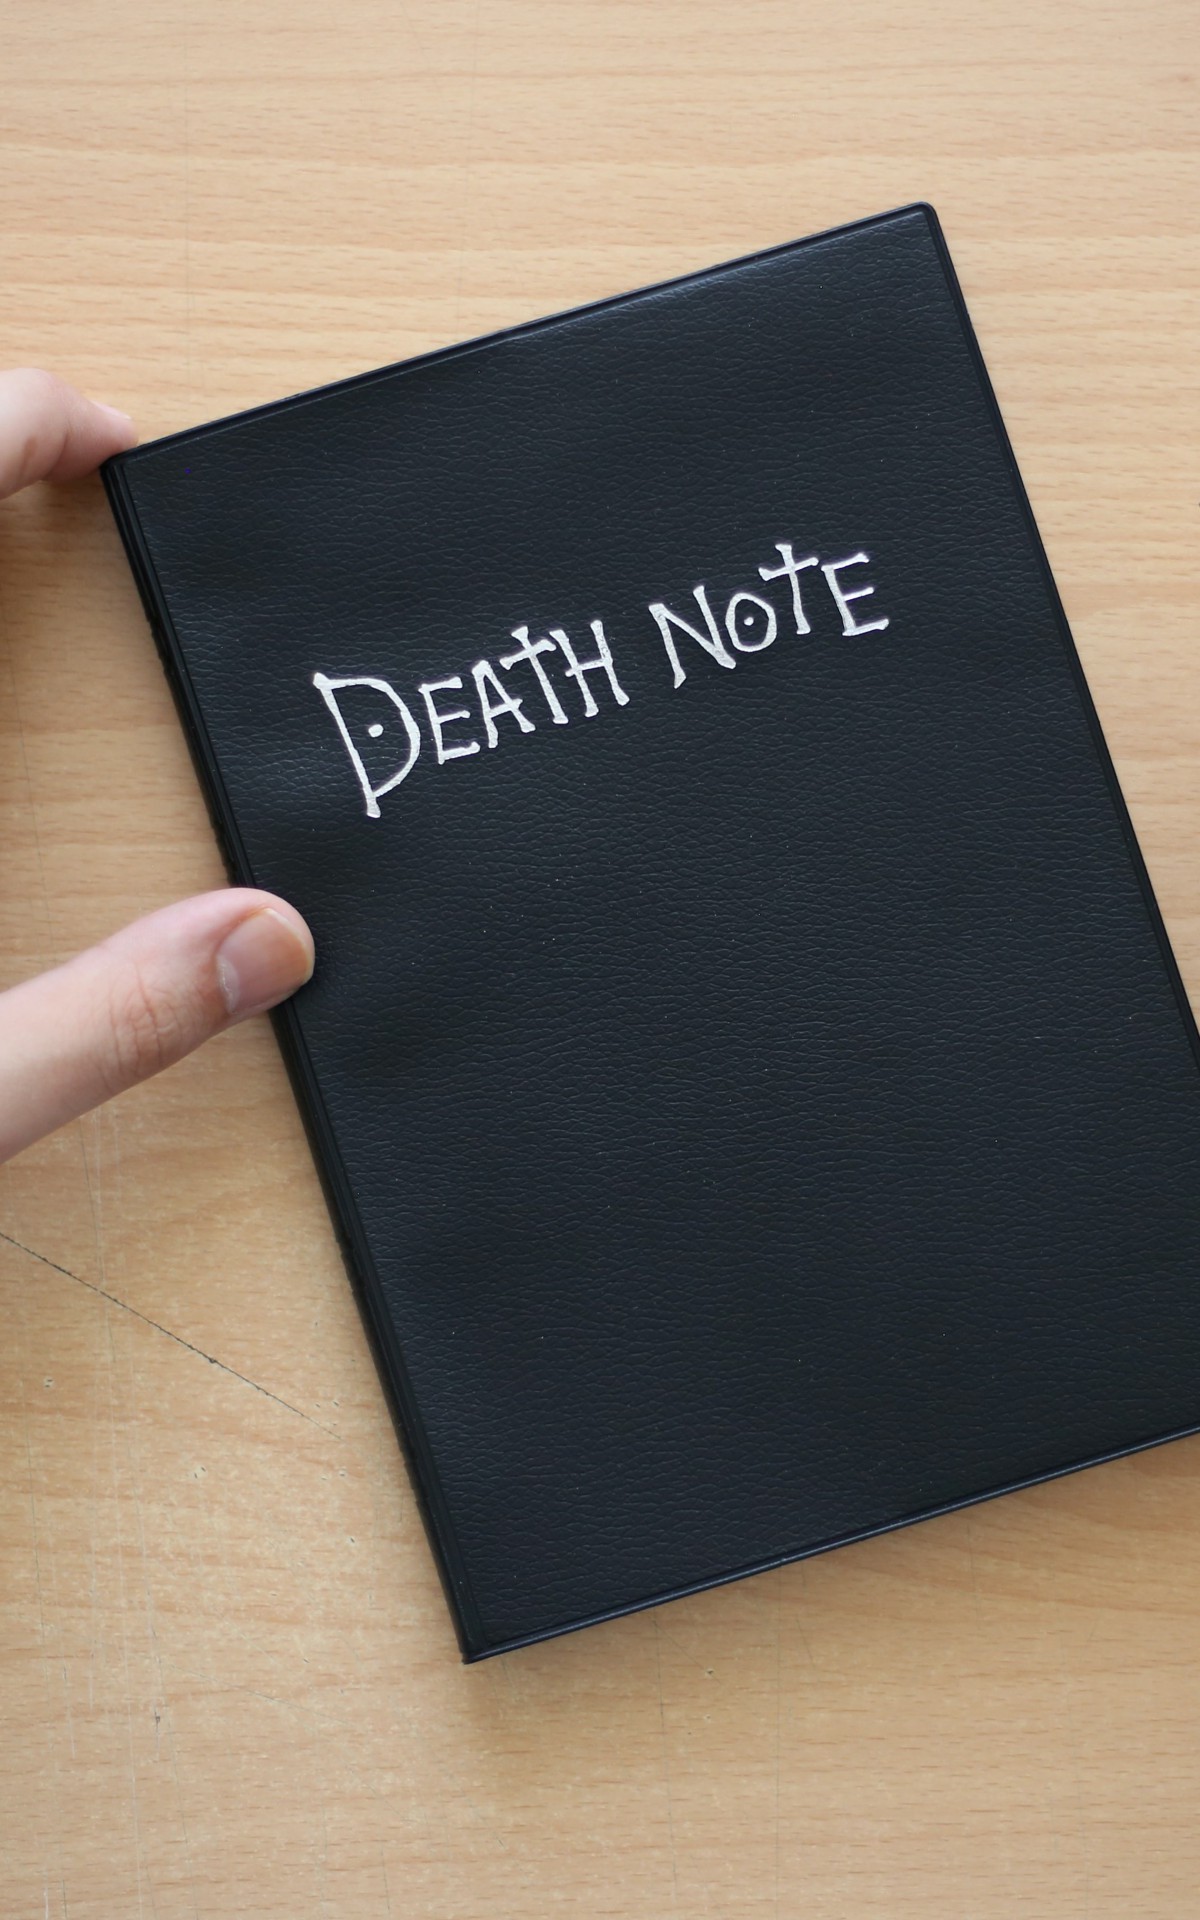 Série de Death Note dos criadores de Stranger Things escala roteirista -  NerdBunker